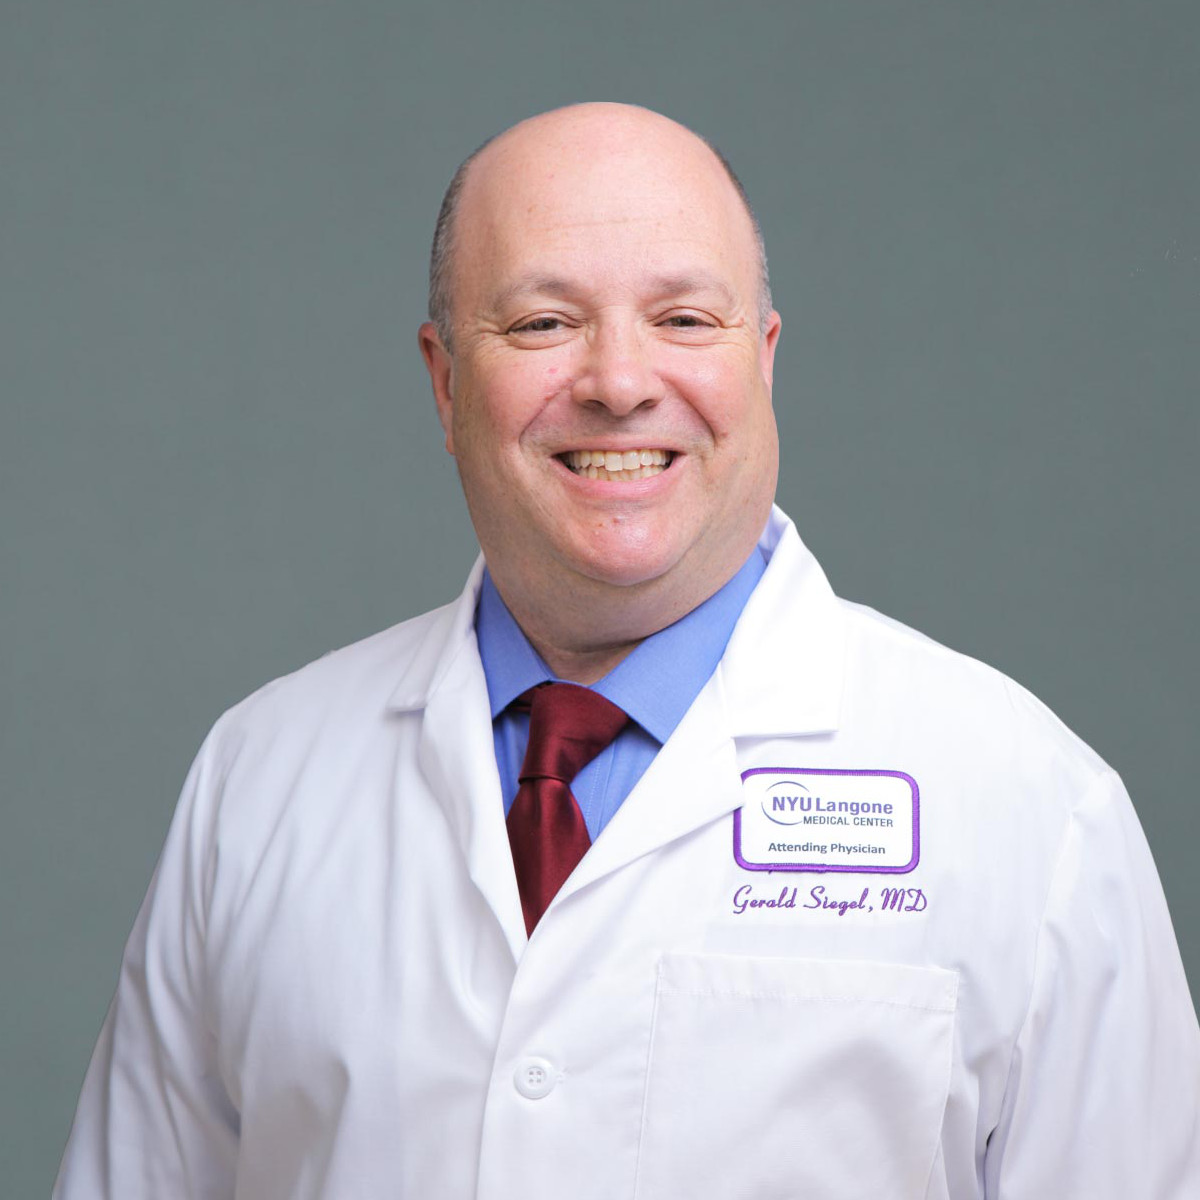 Gerald Siegel,MD. Gynecology